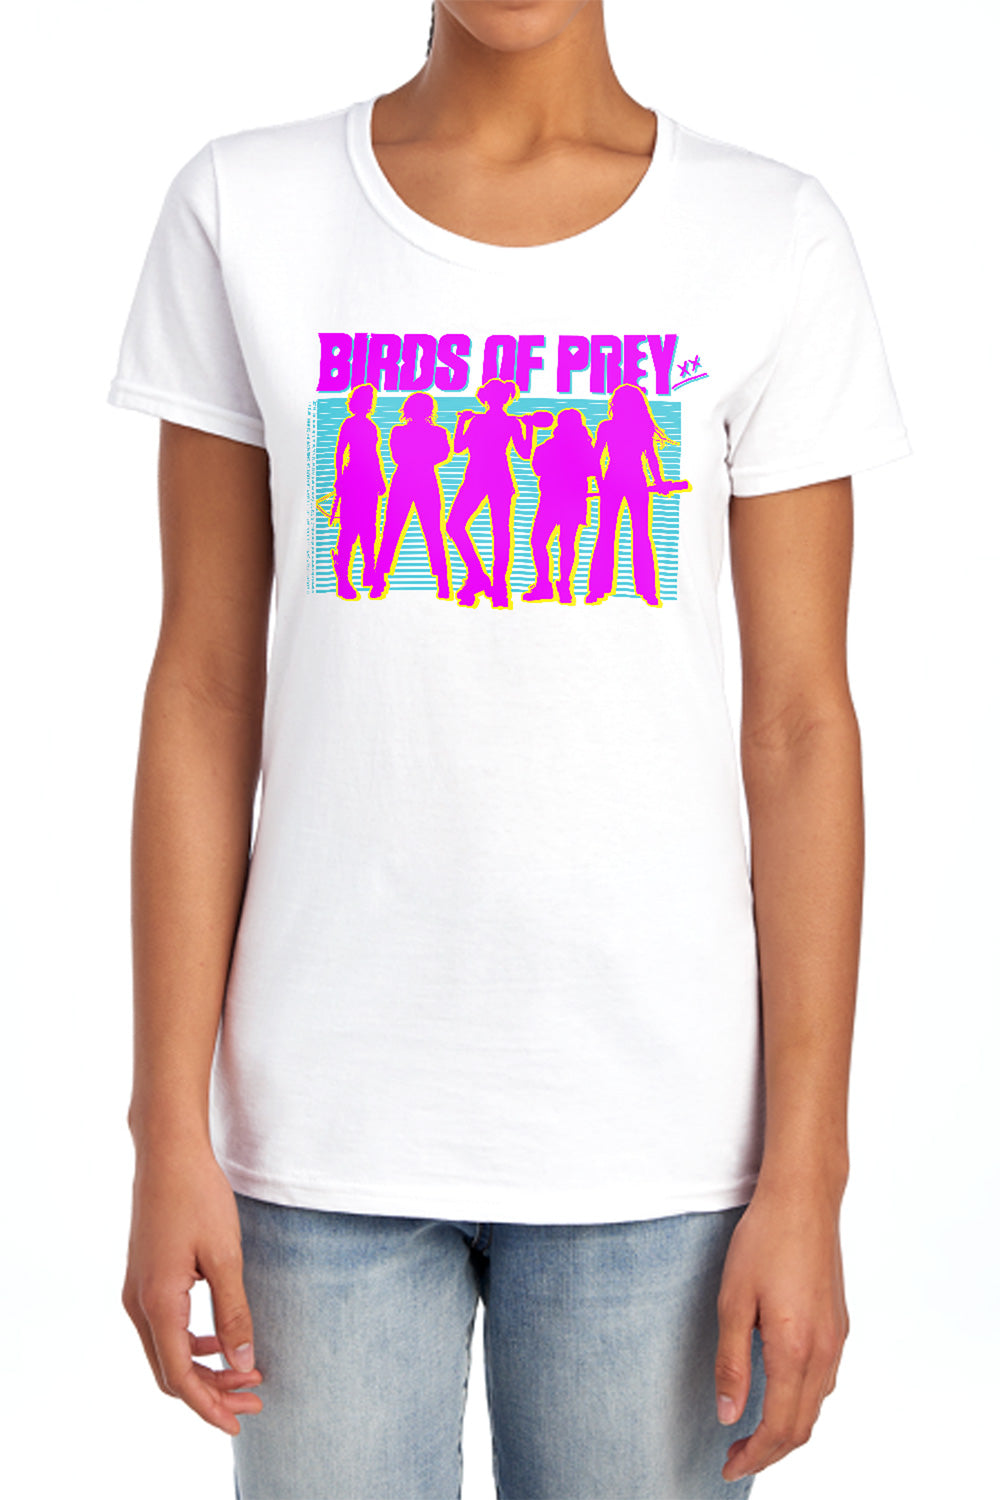 BIRDS OF PREY : SILHOUETTES WOMENS SHORT SLEEVE White 2X